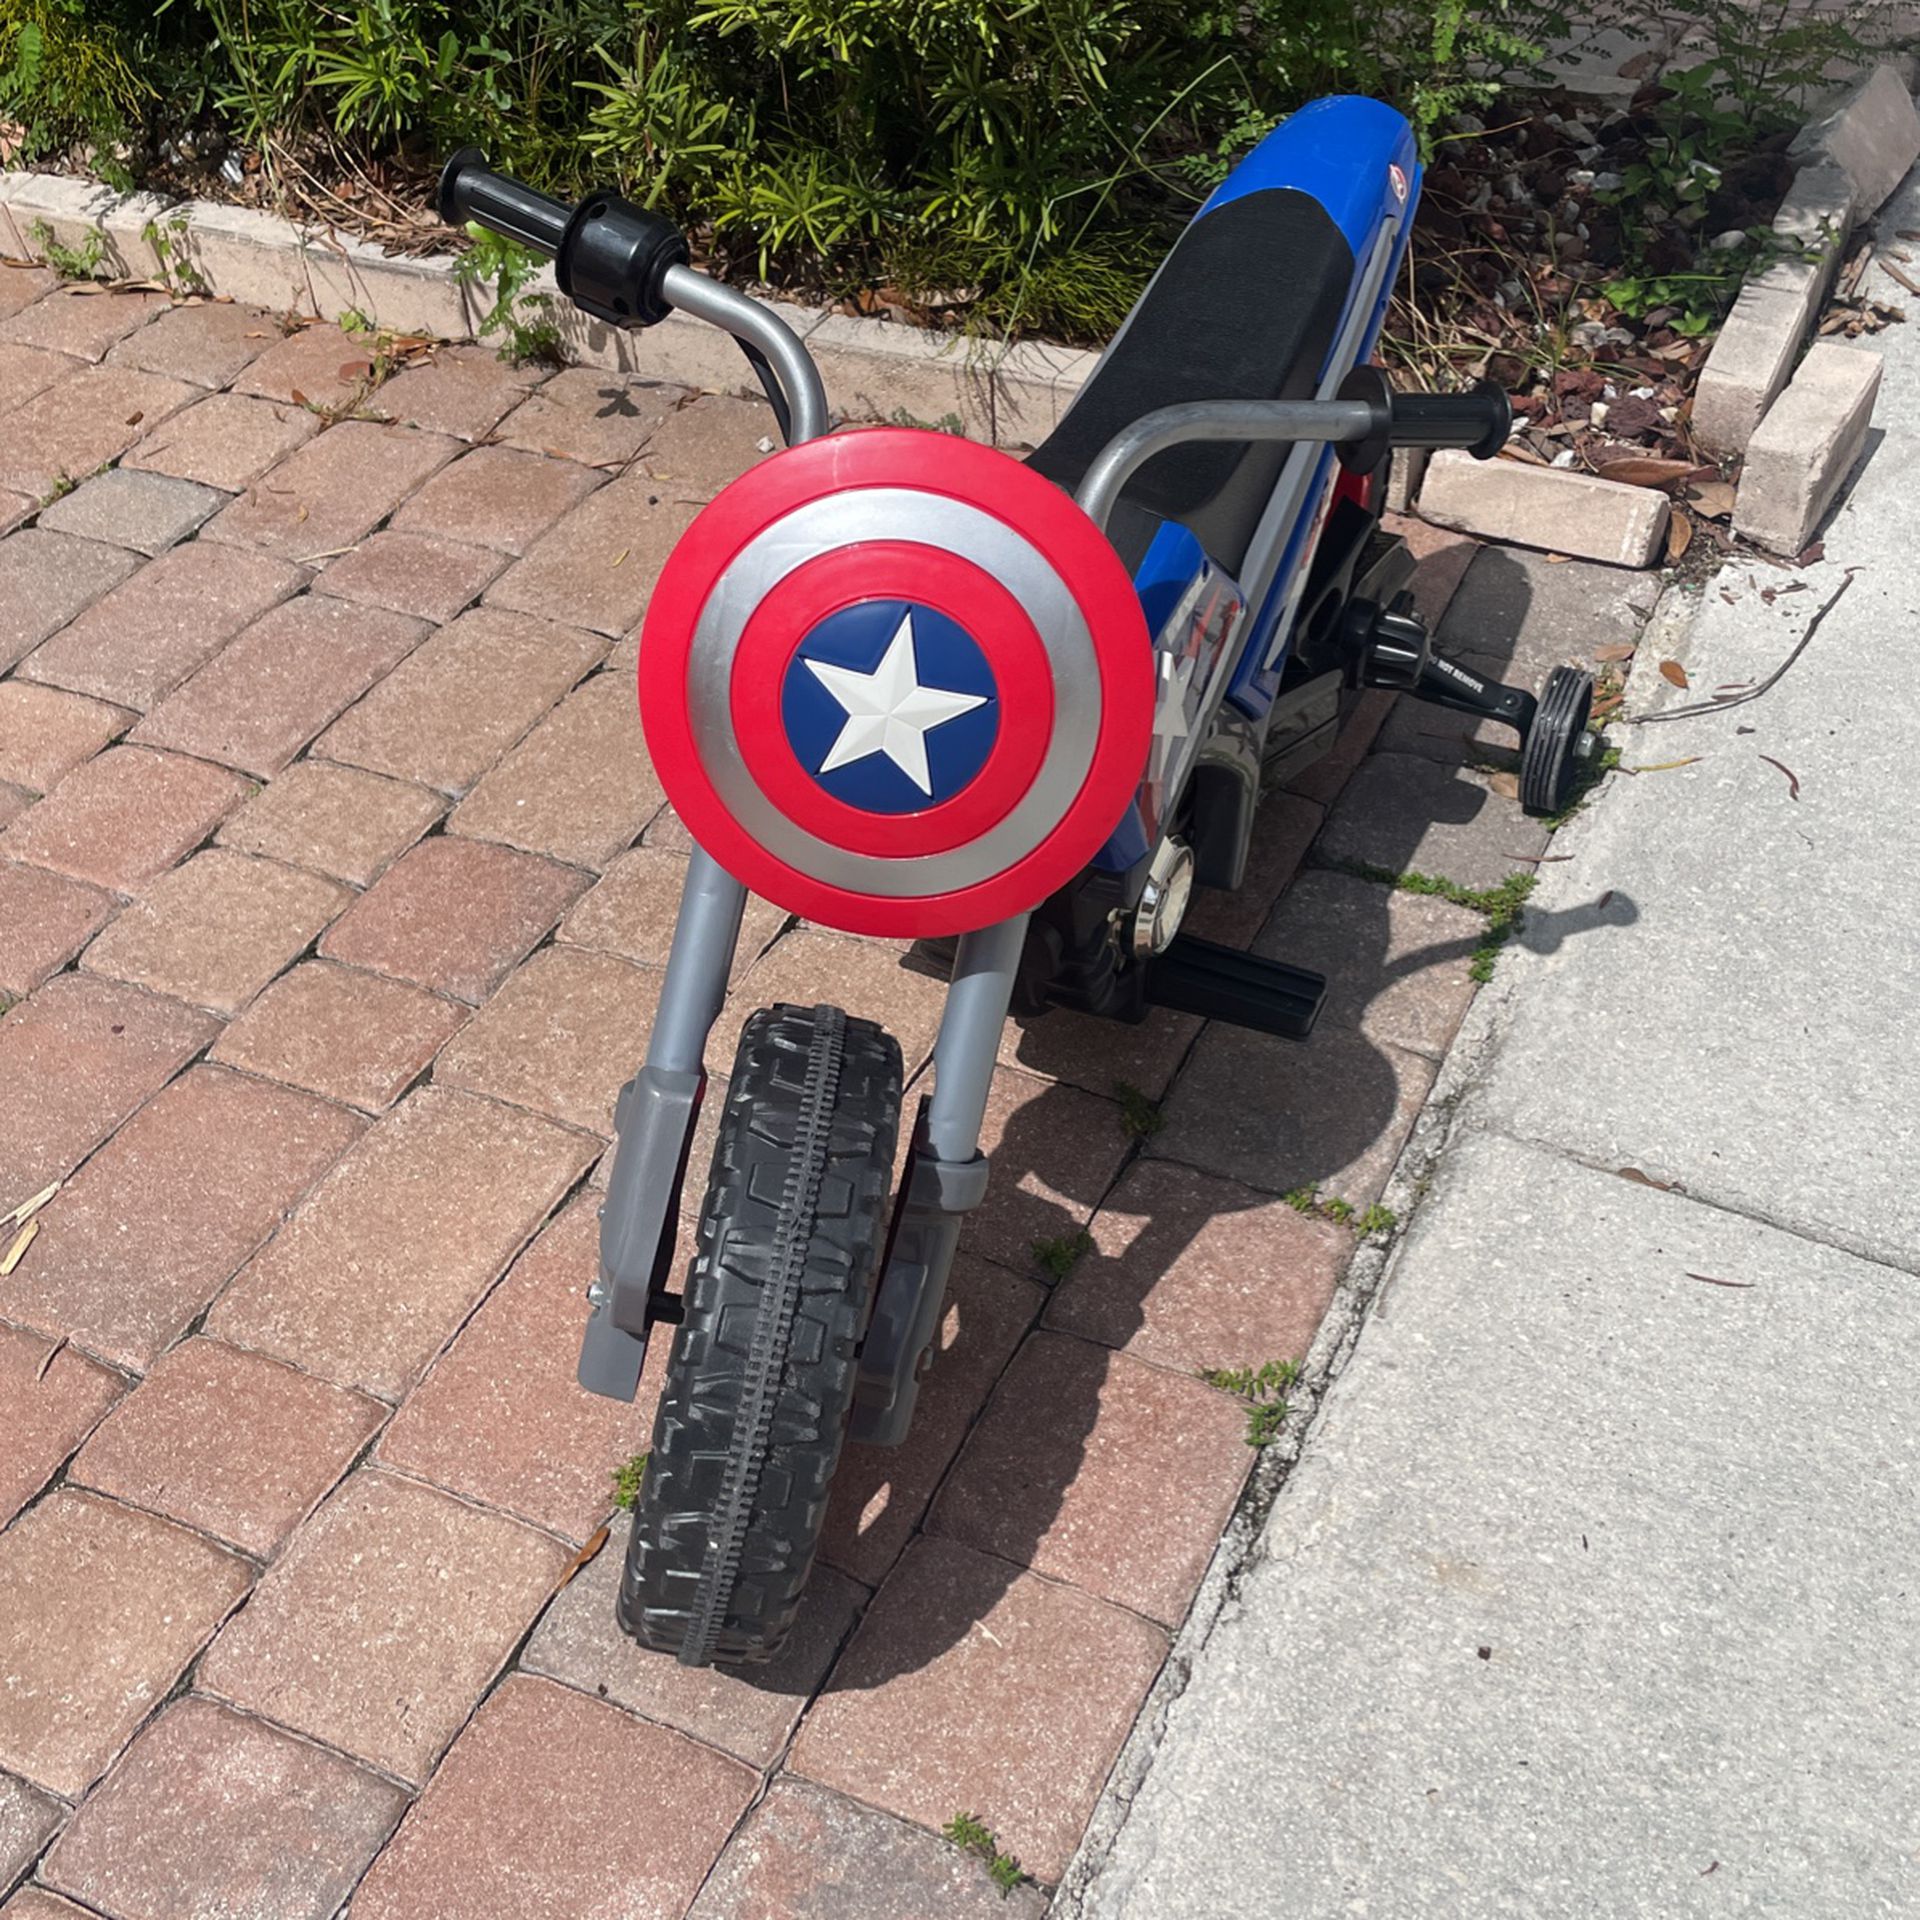 Captain America motorbike